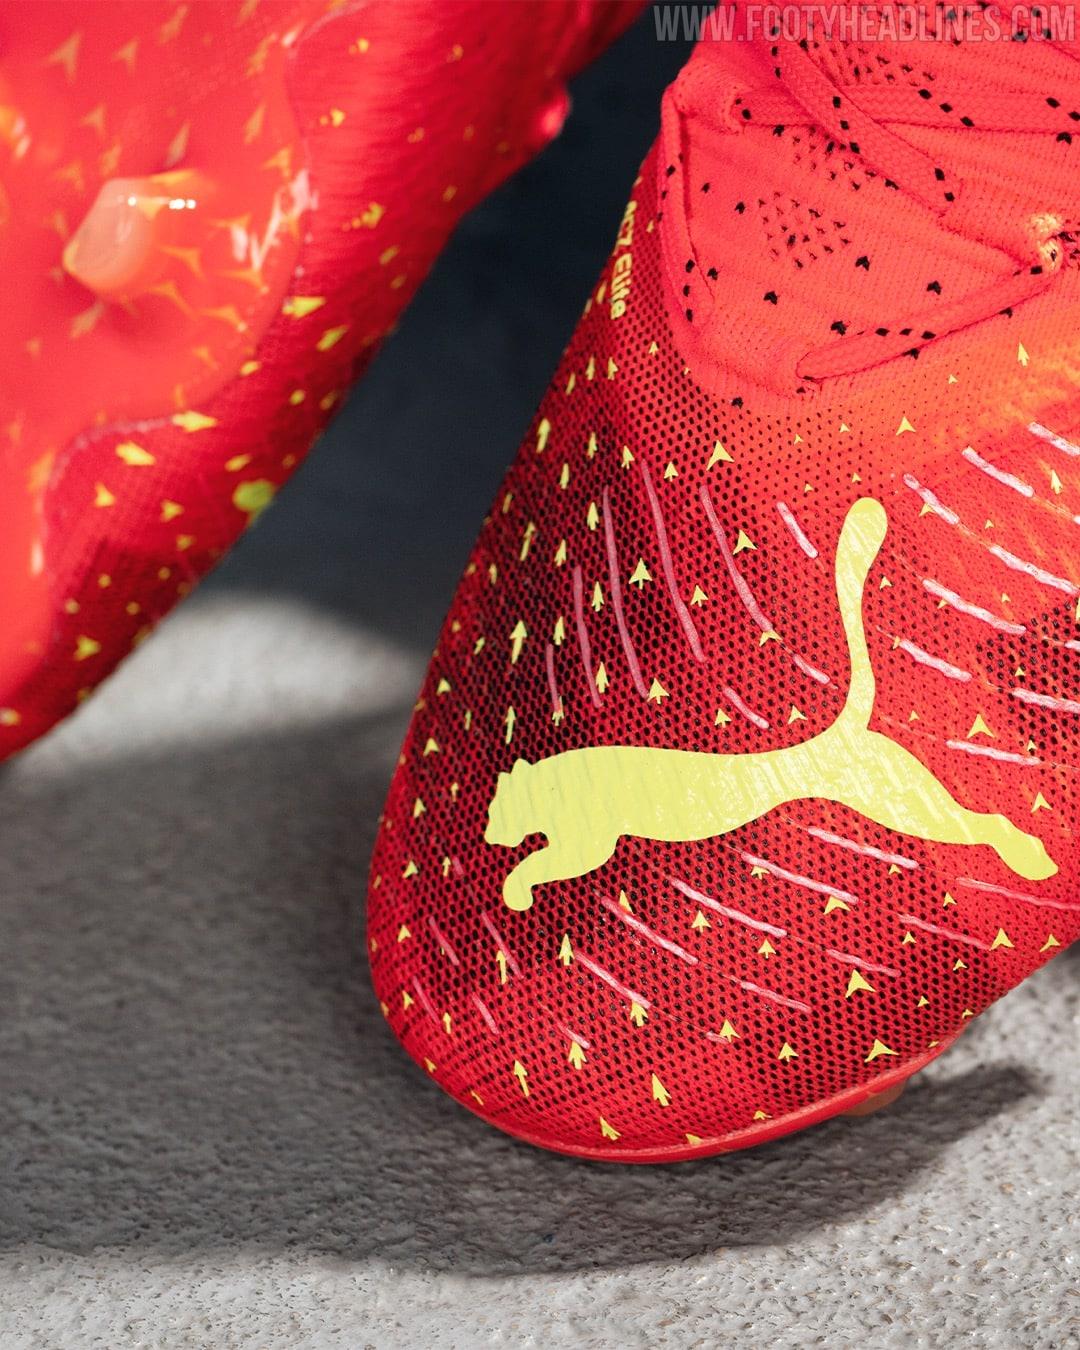 Puma lance sa nouvelle chaussure de foot Puma Ultra - footpack.